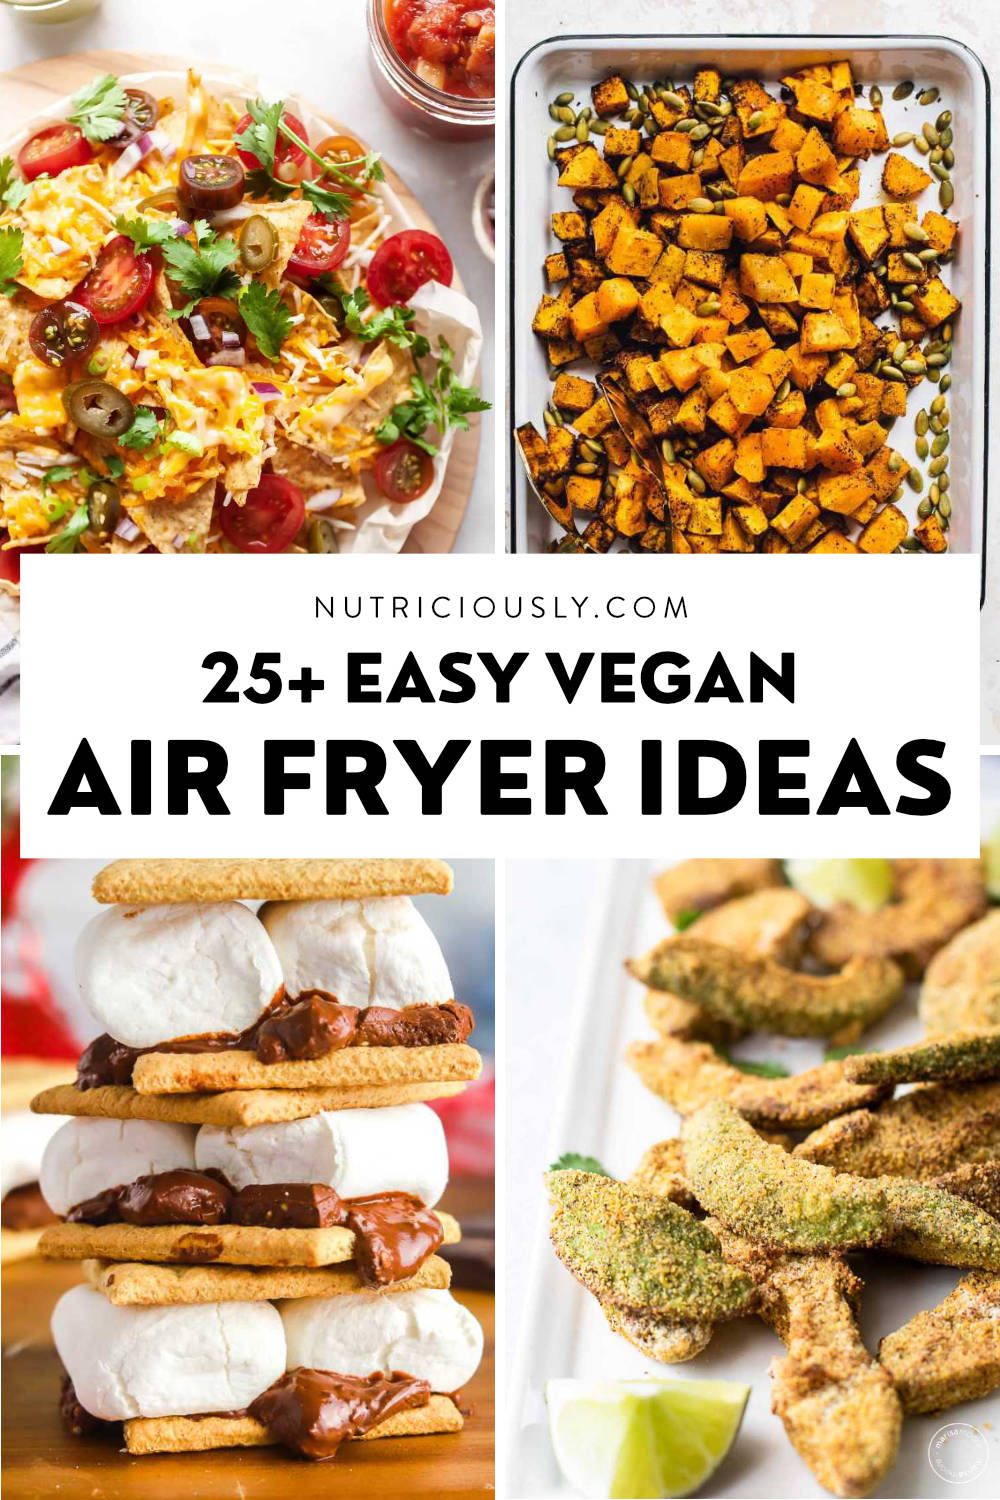 Air Fryer Recipes Pin 1